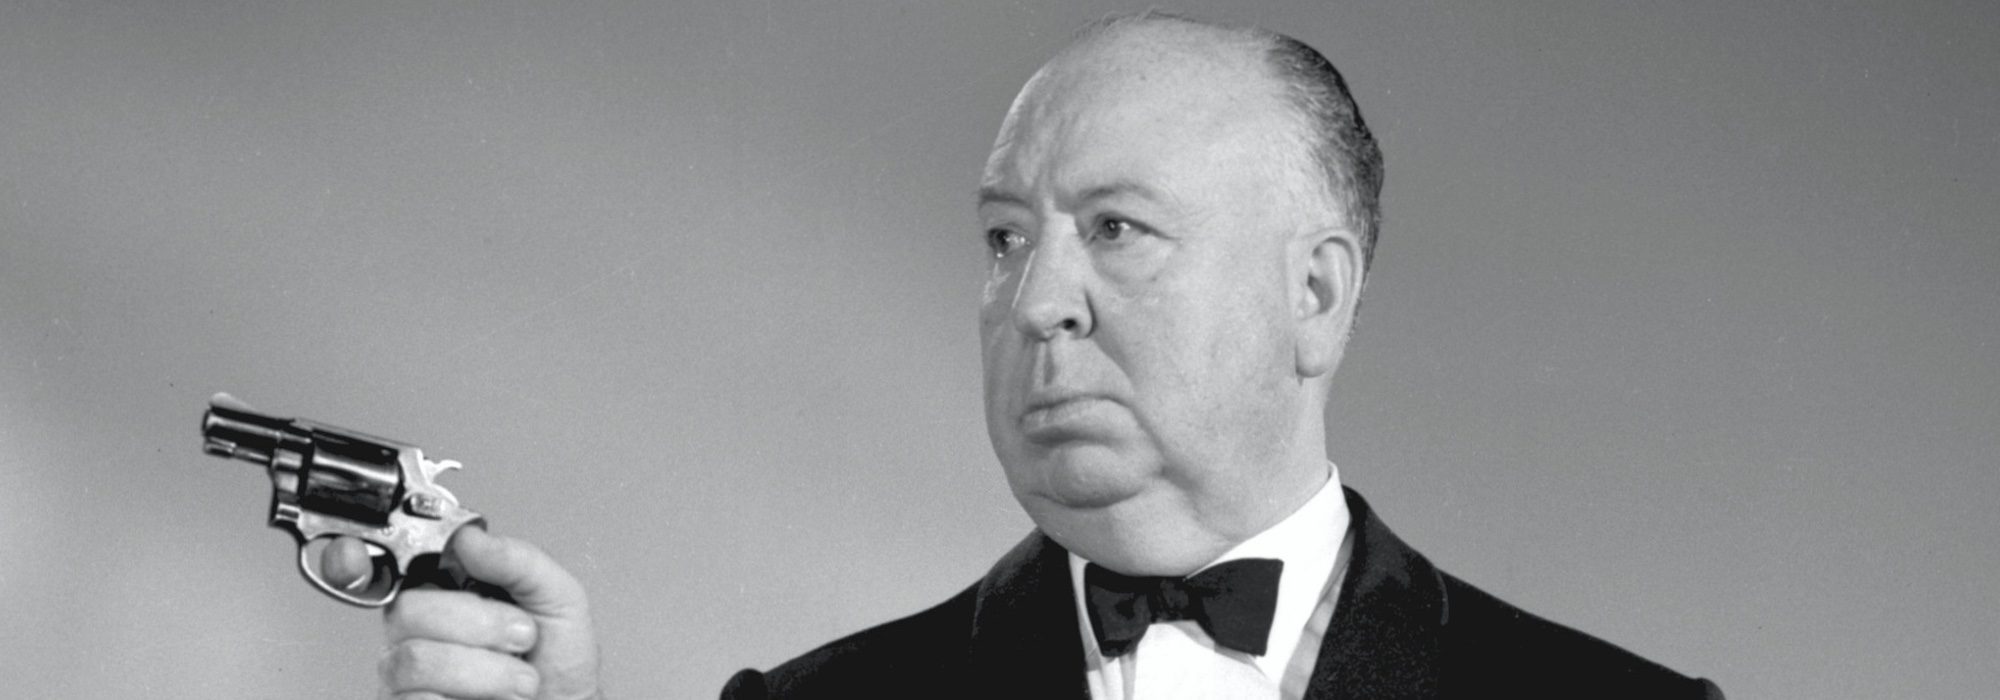 Alfred Hitchcock presenta